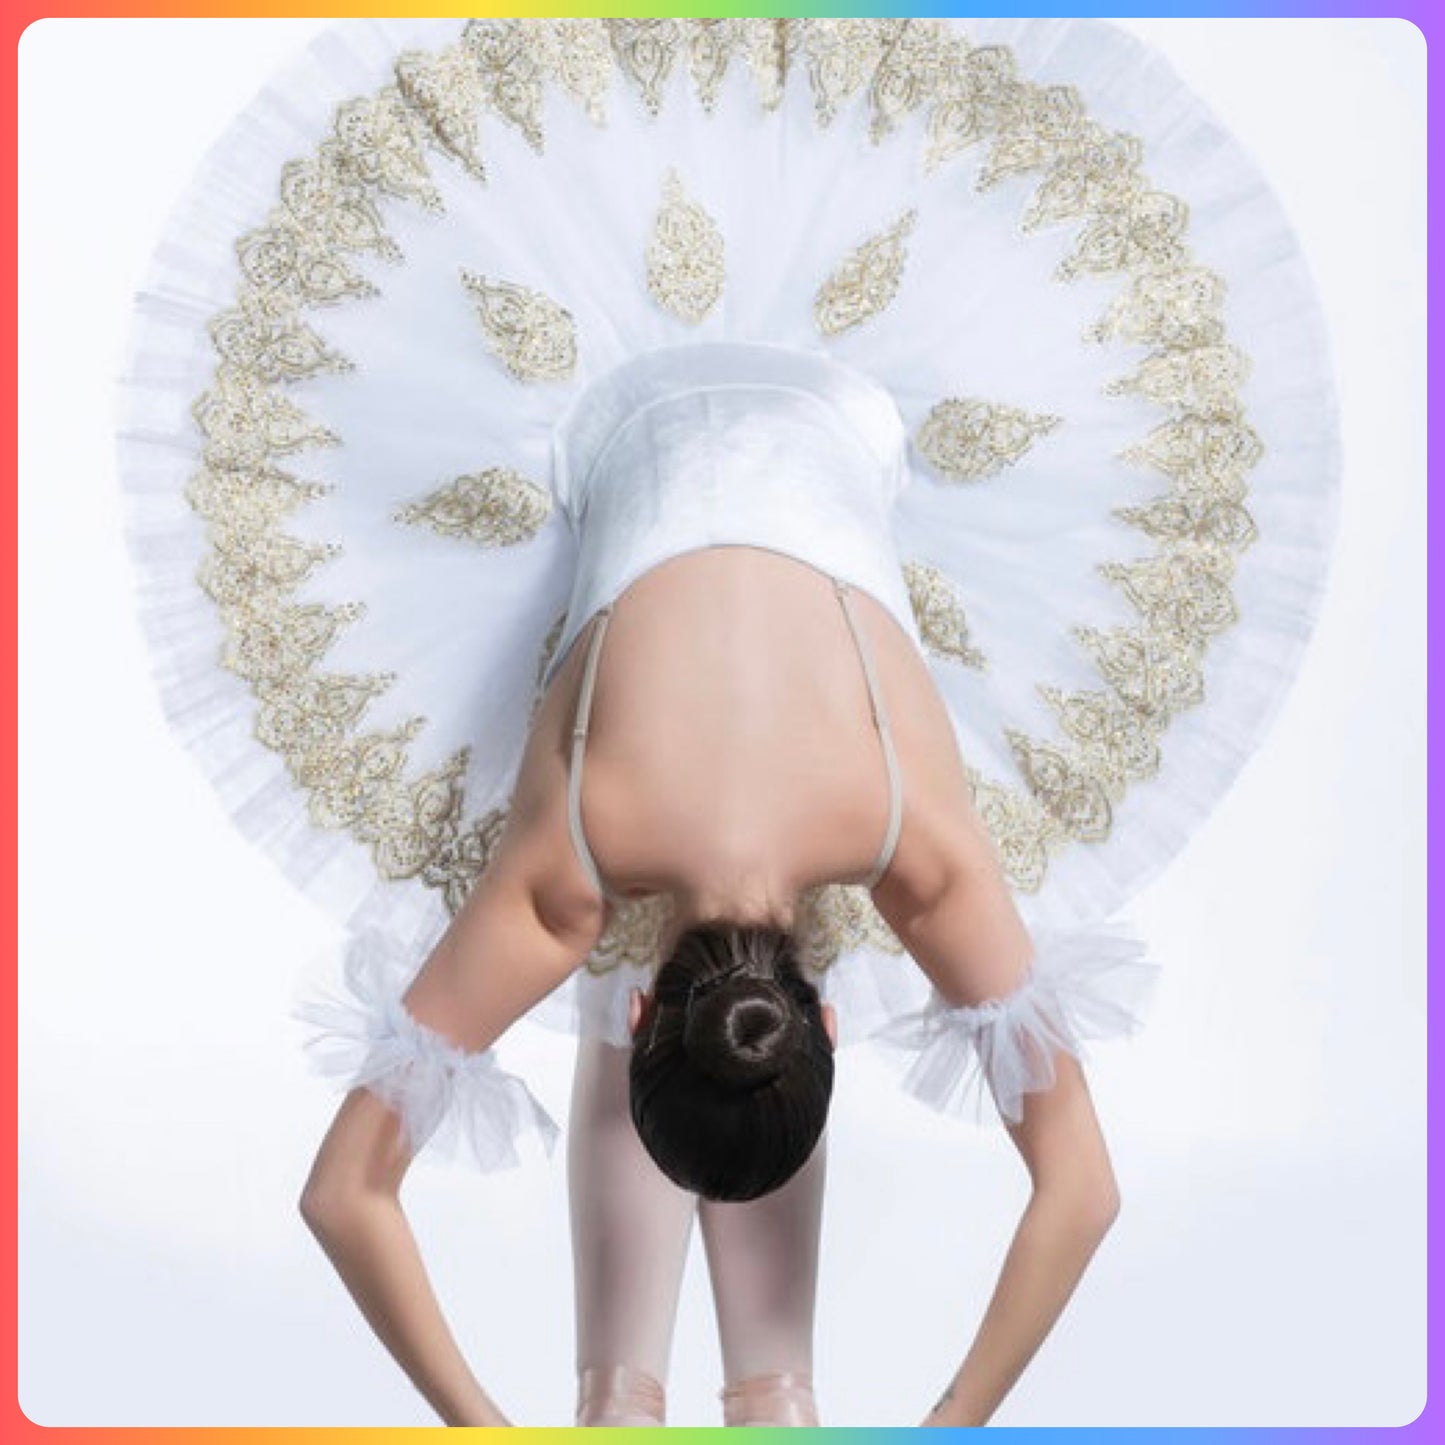 White Professional Ballet Pancake Tutu (Child & Adult Sizes)